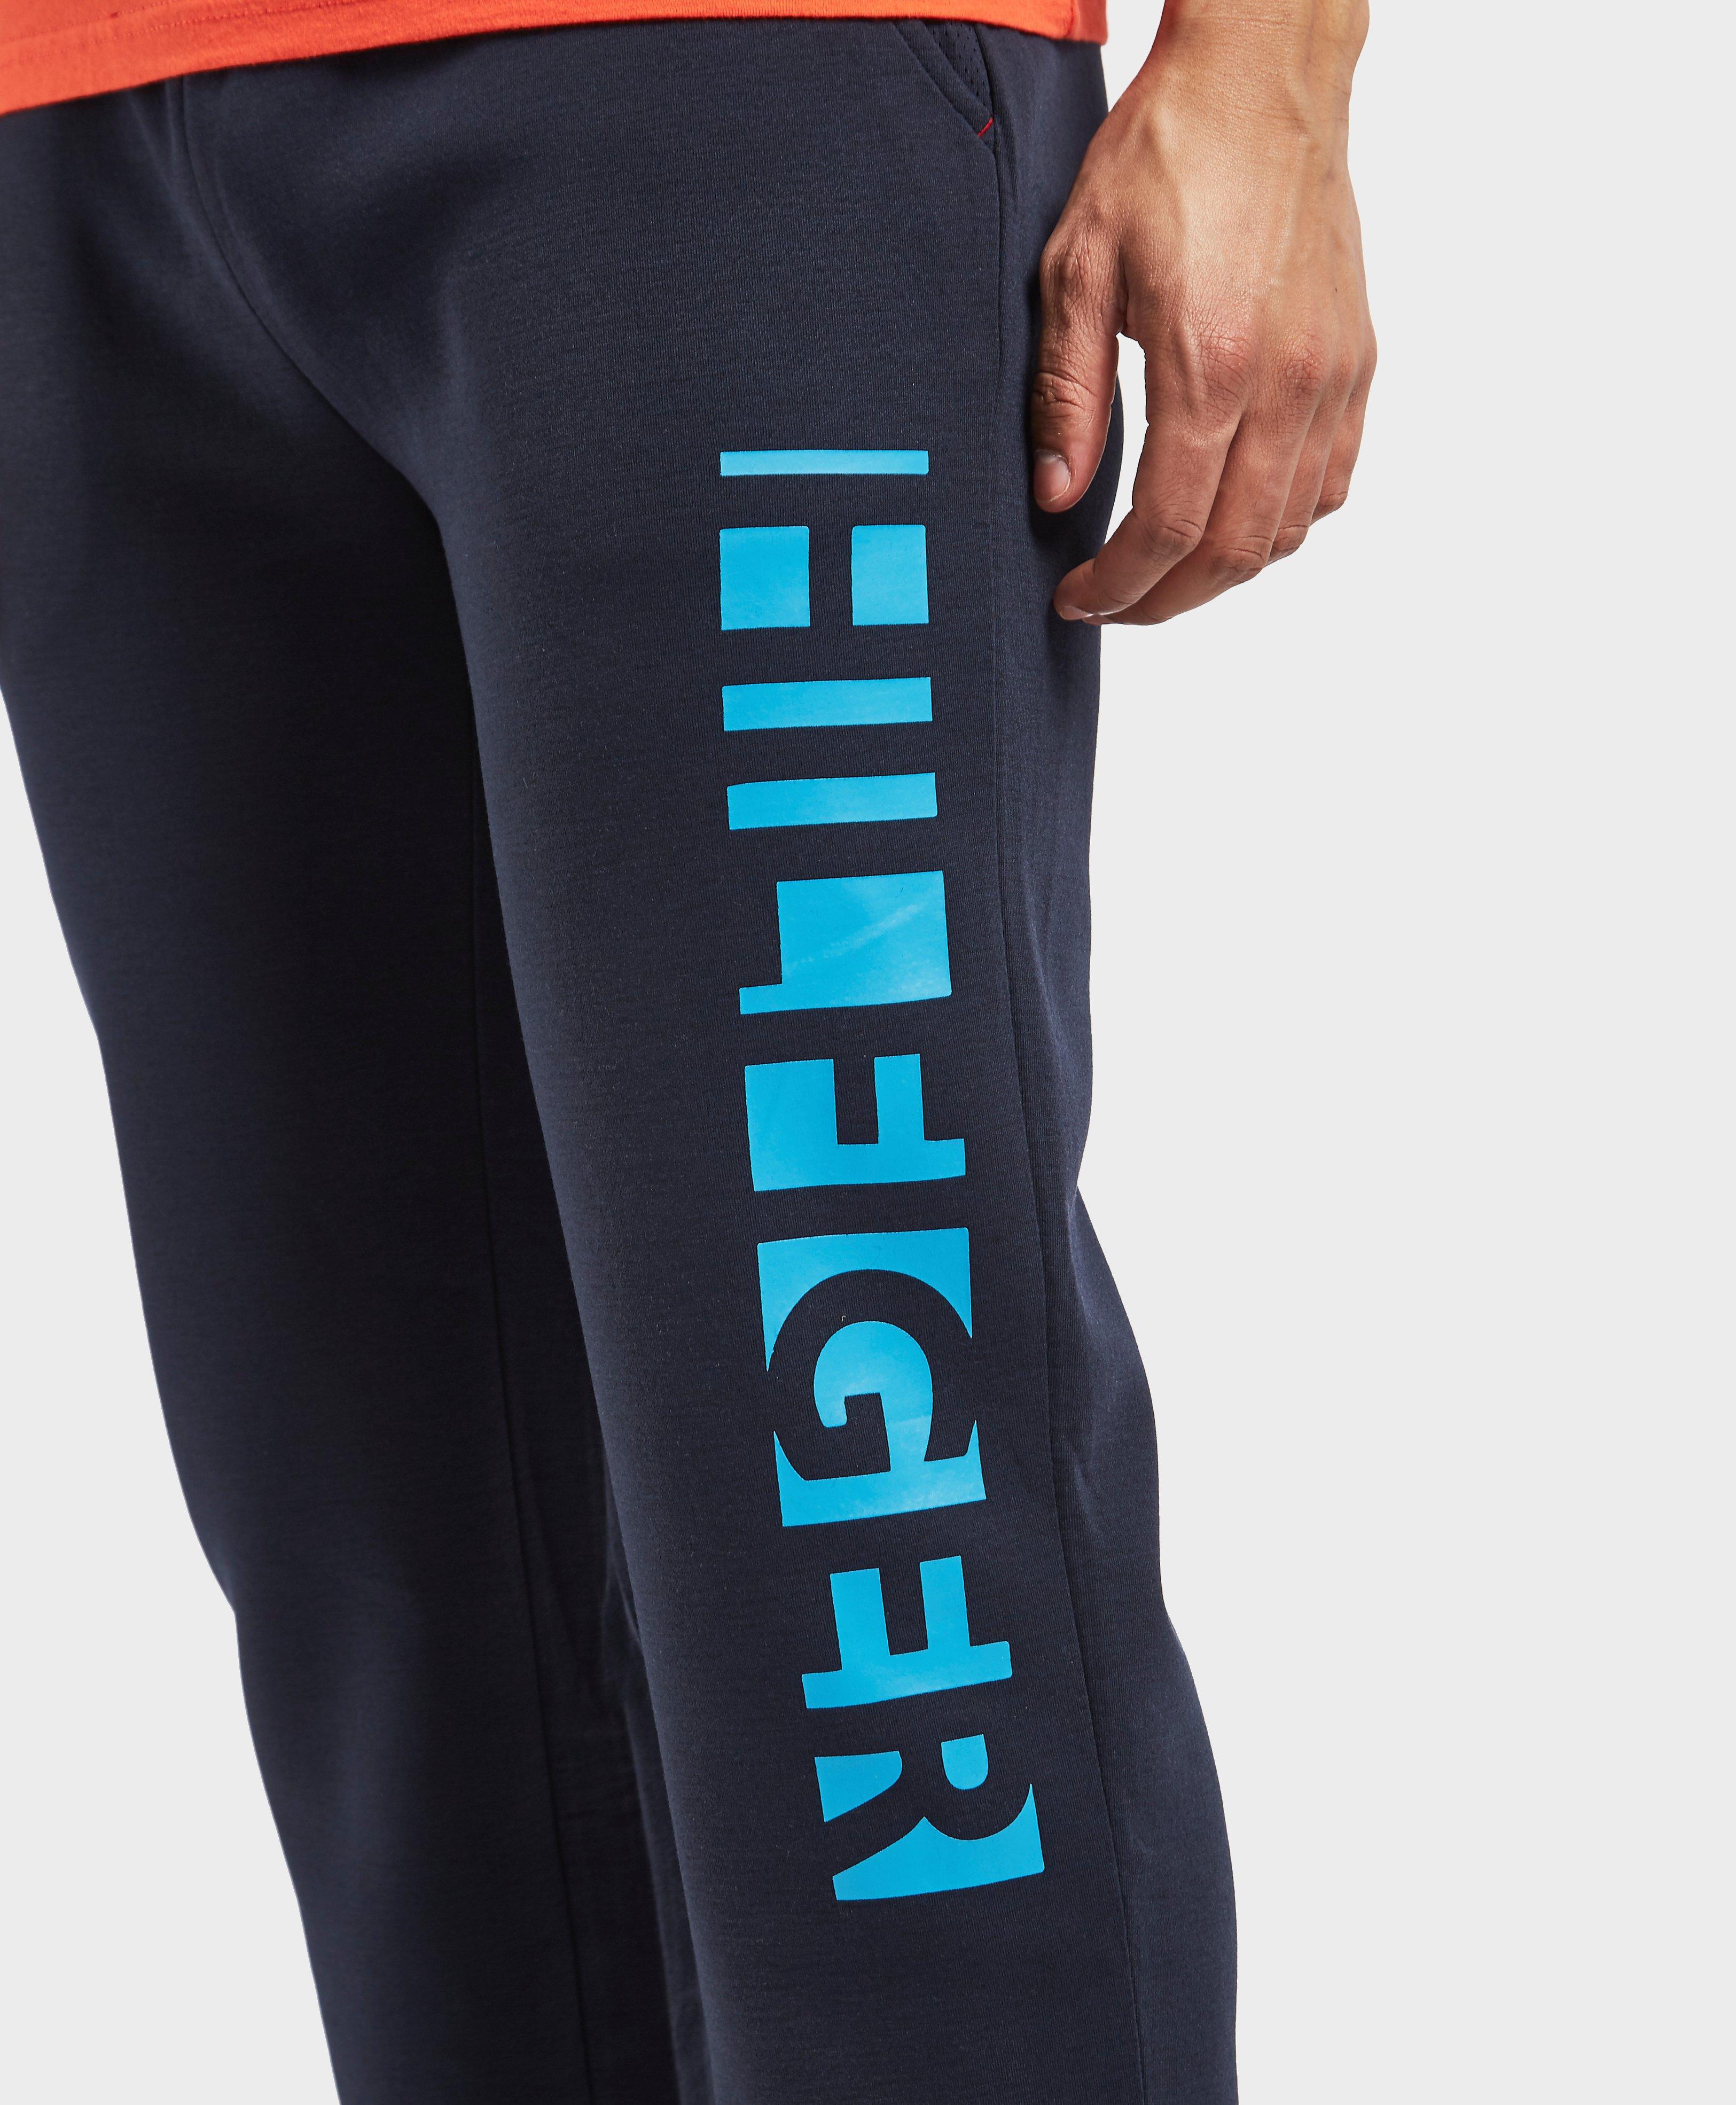 Lyst - Tommy Hilfiger Large Leg Brand Track Pants in Blue for Men